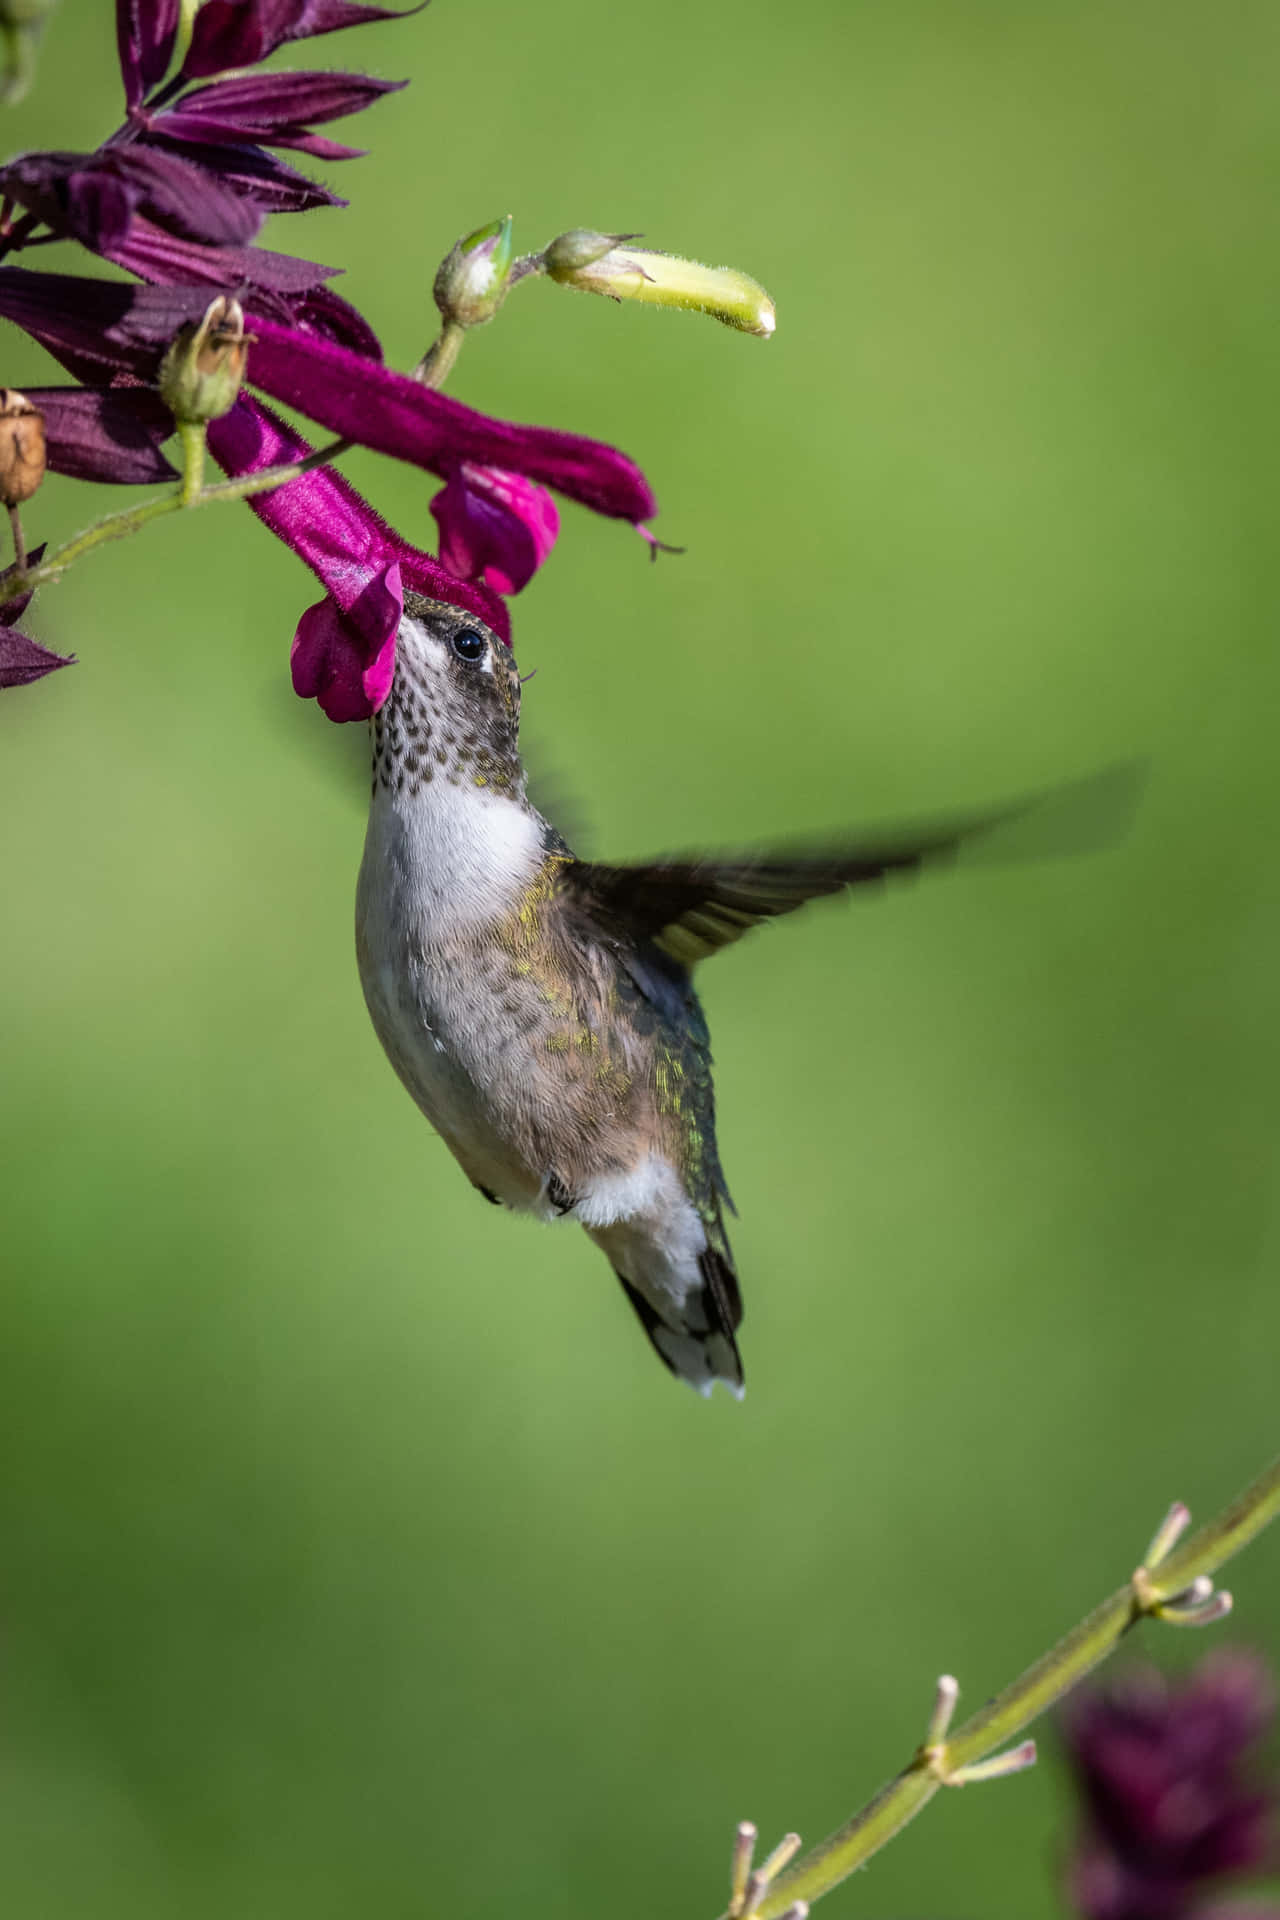 A portrait of a Female Hummingbird